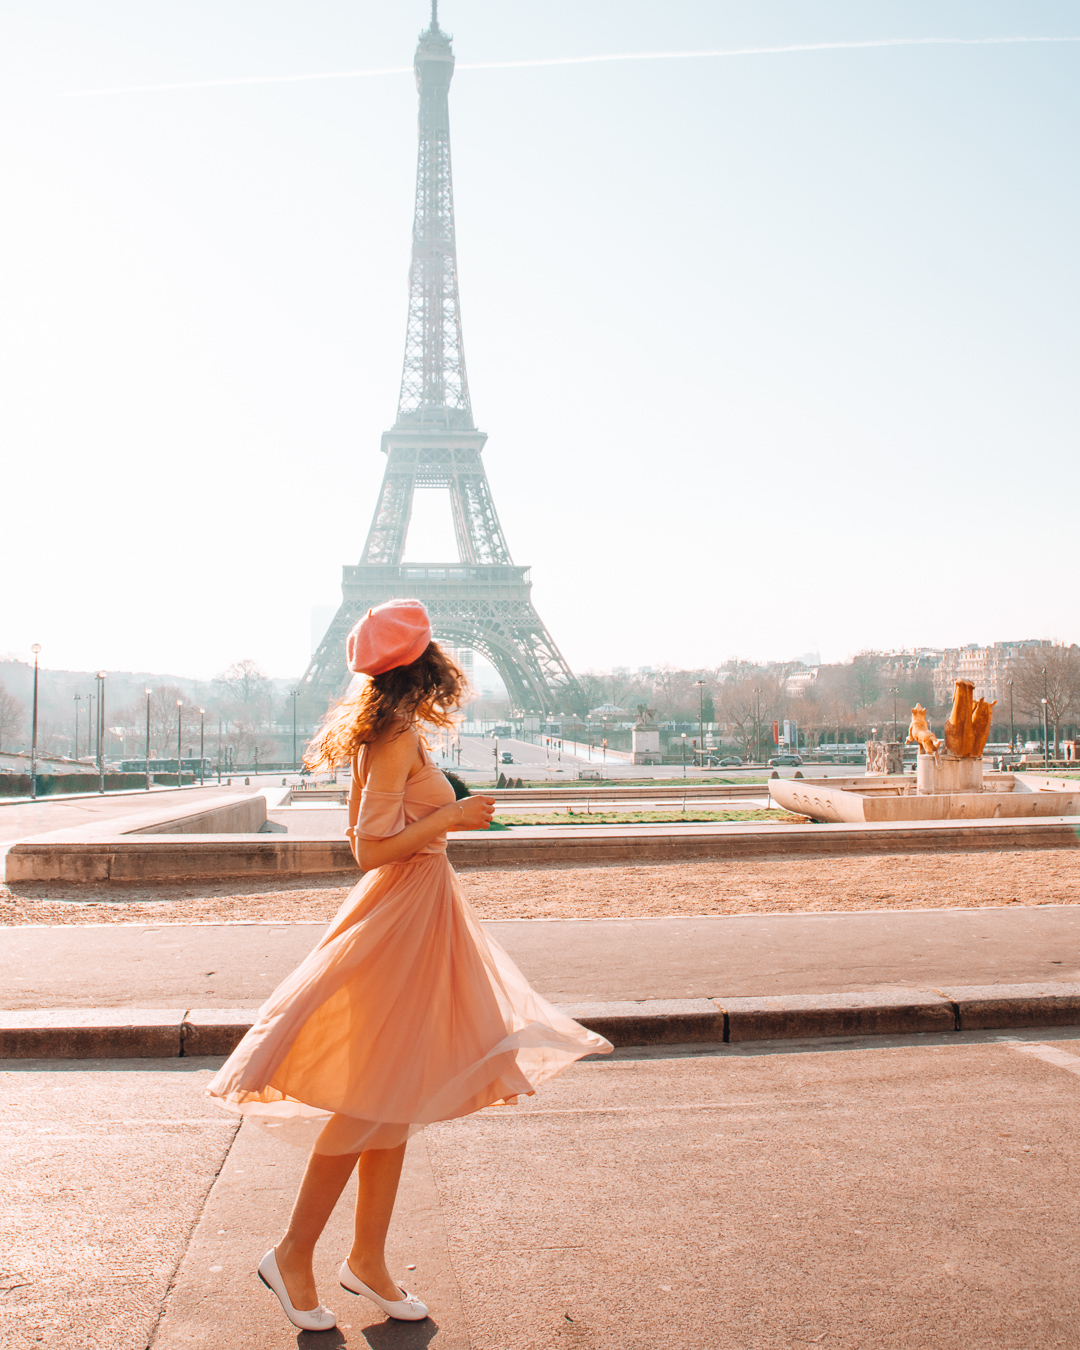 Perfect day in Paris #paris #parisianstyle #traveltiktok